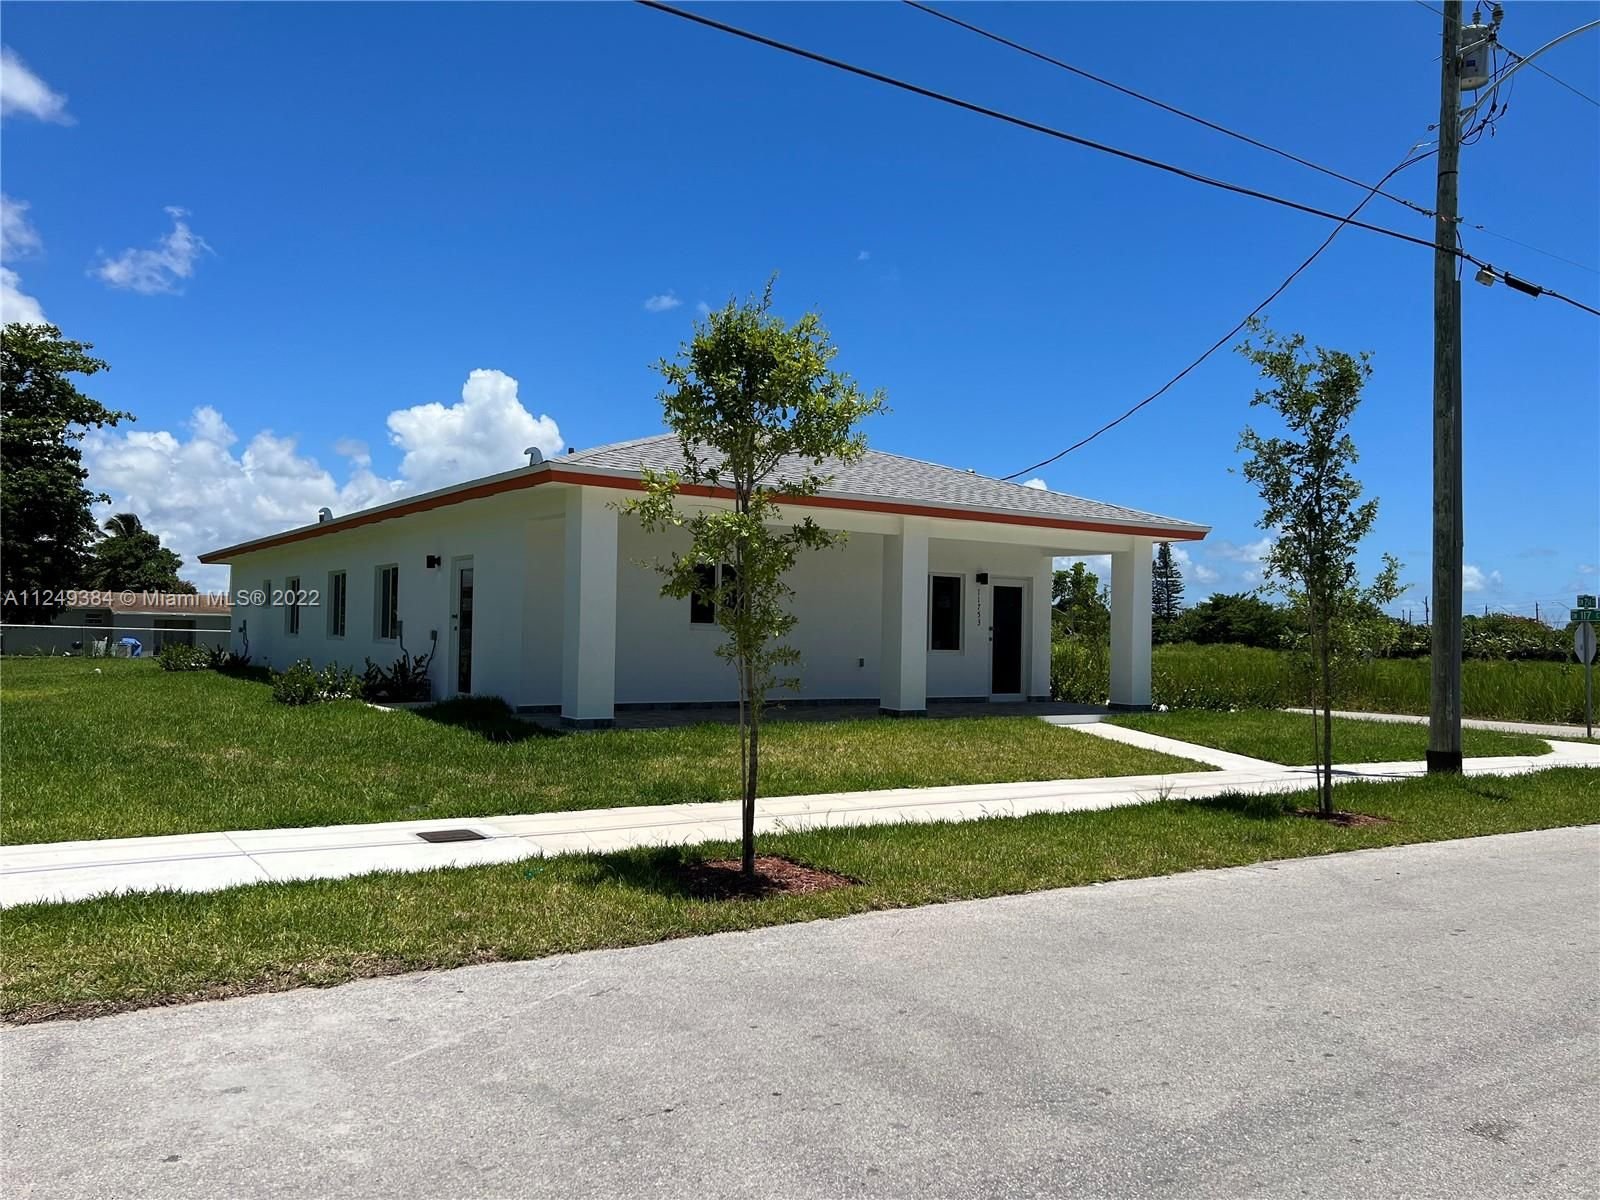 Real estate property located at 11751 214 Street #11751, Miami-Dade County, Miami, FL